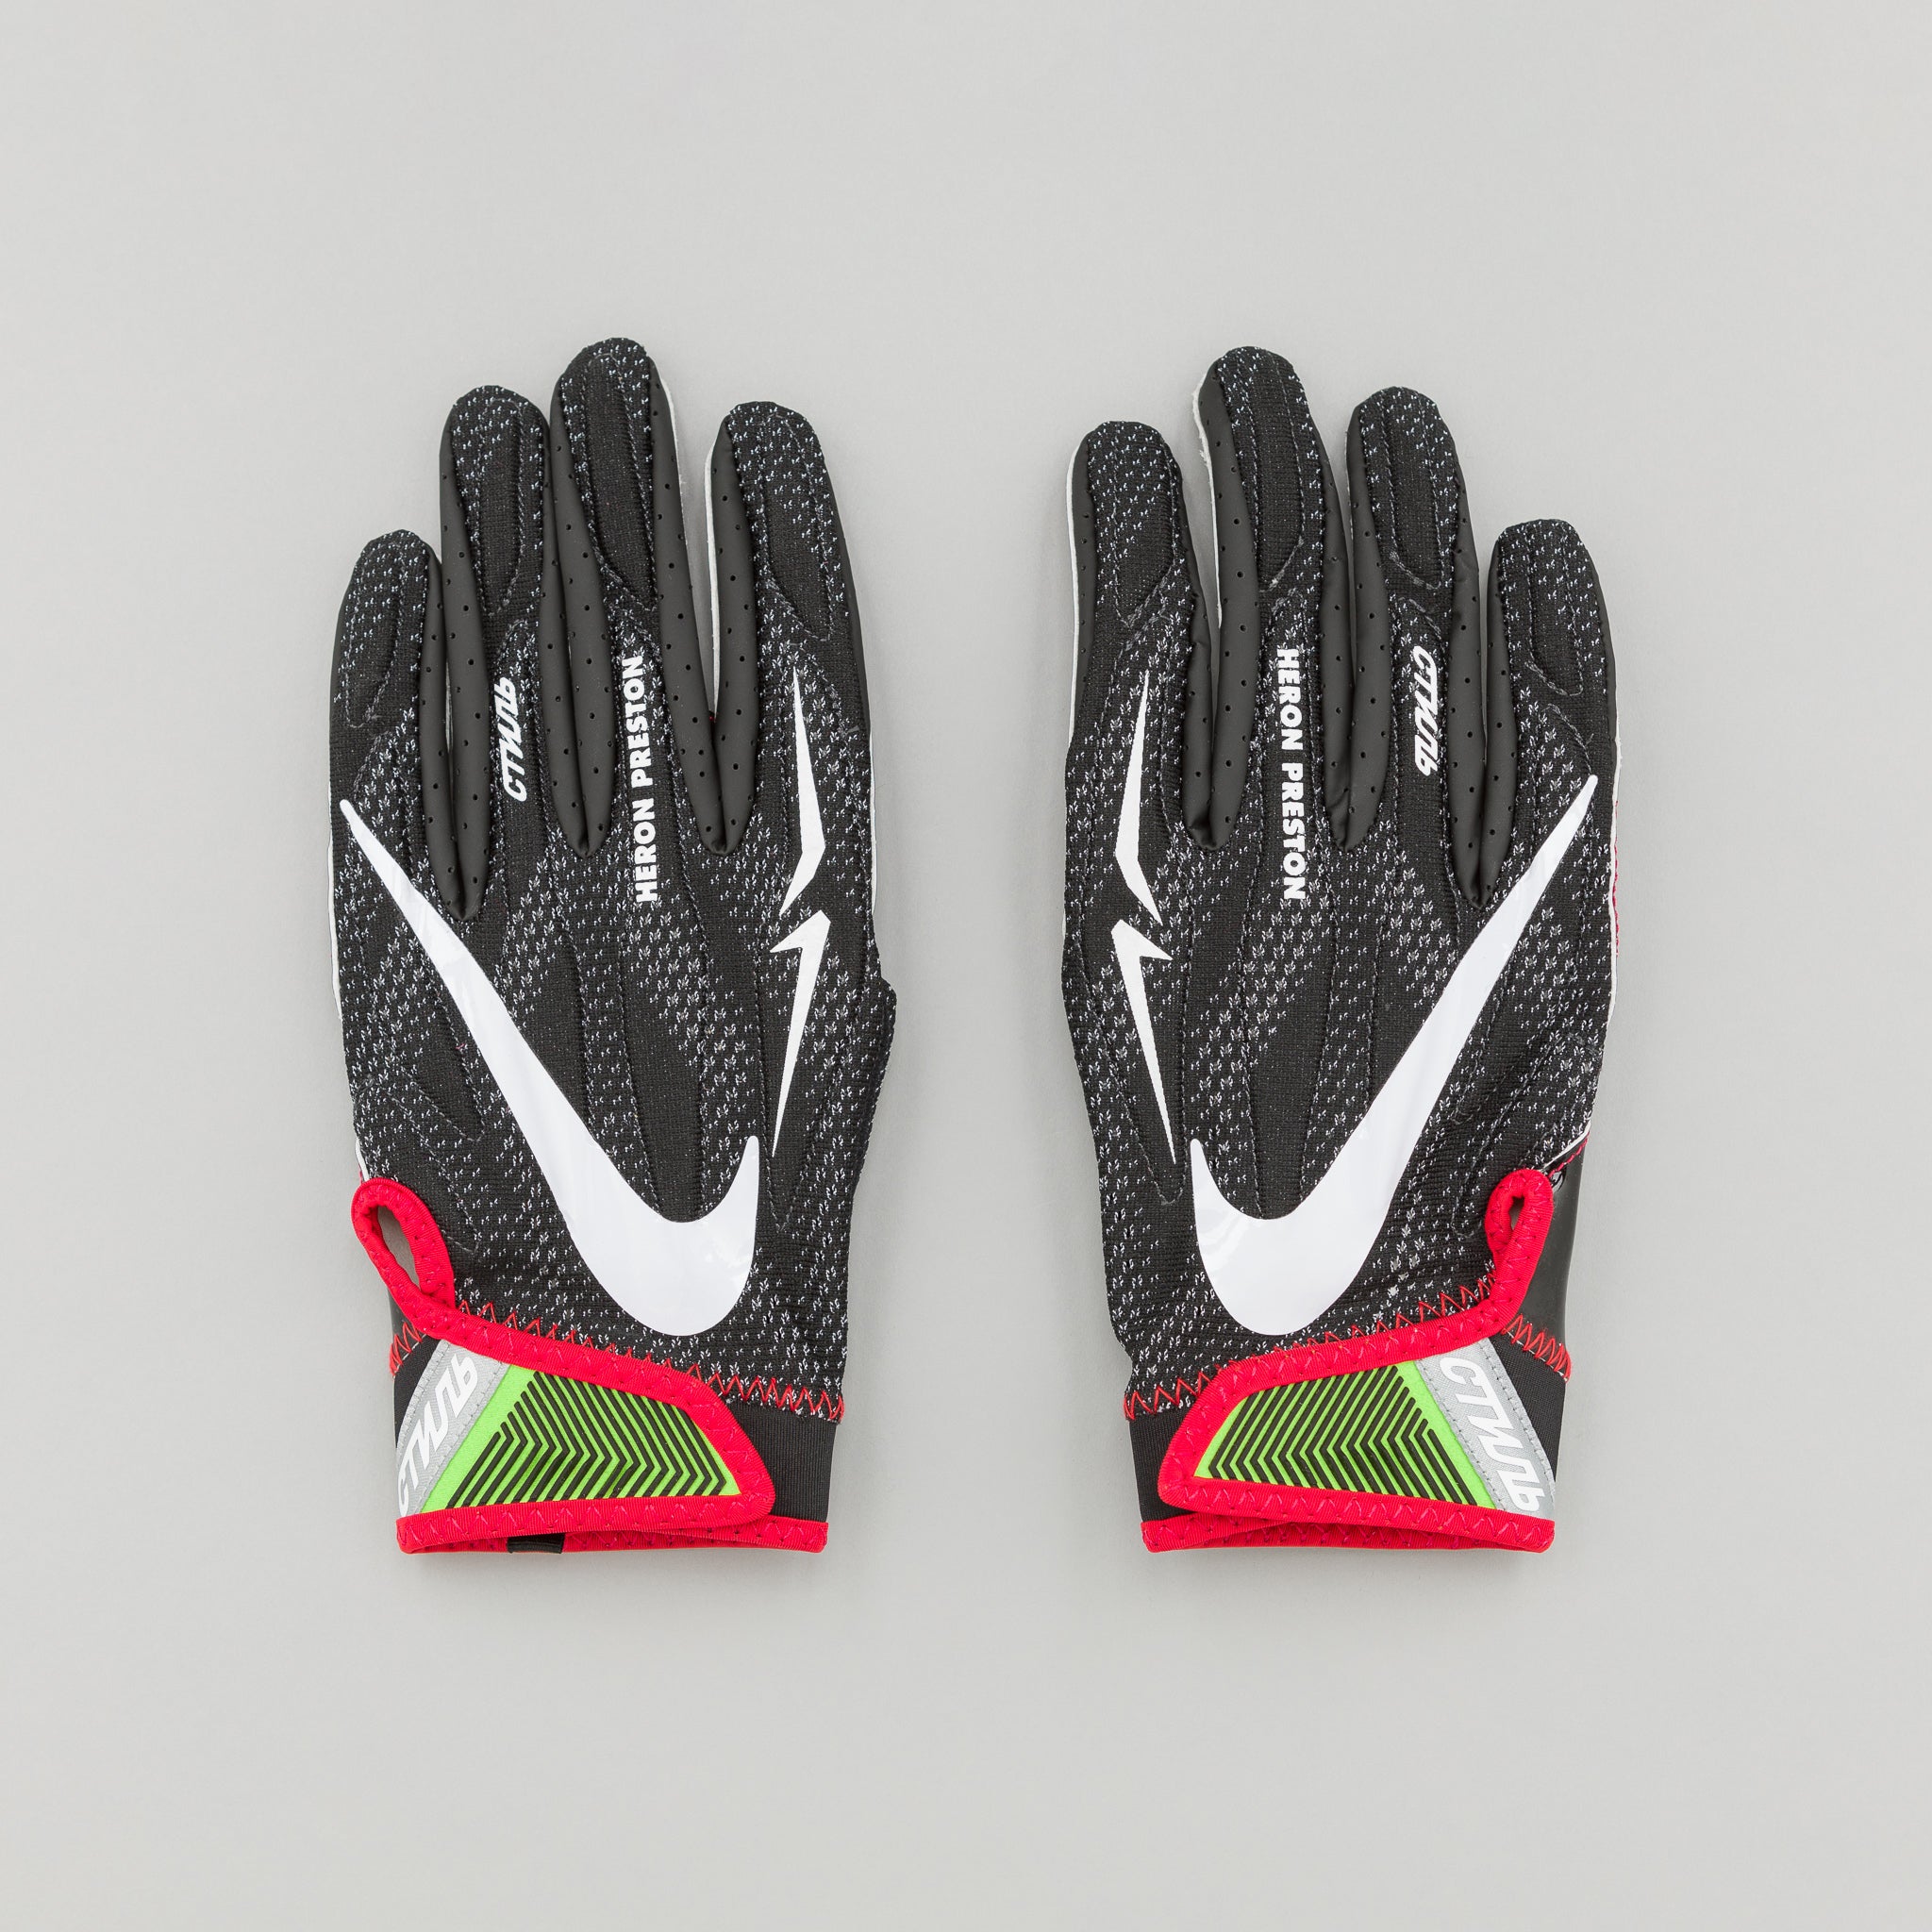 apuntalar violento descuento Very Goods | Nike x Heron Preston Superbad 4.5 FG Skill Glove in Black |  Notre